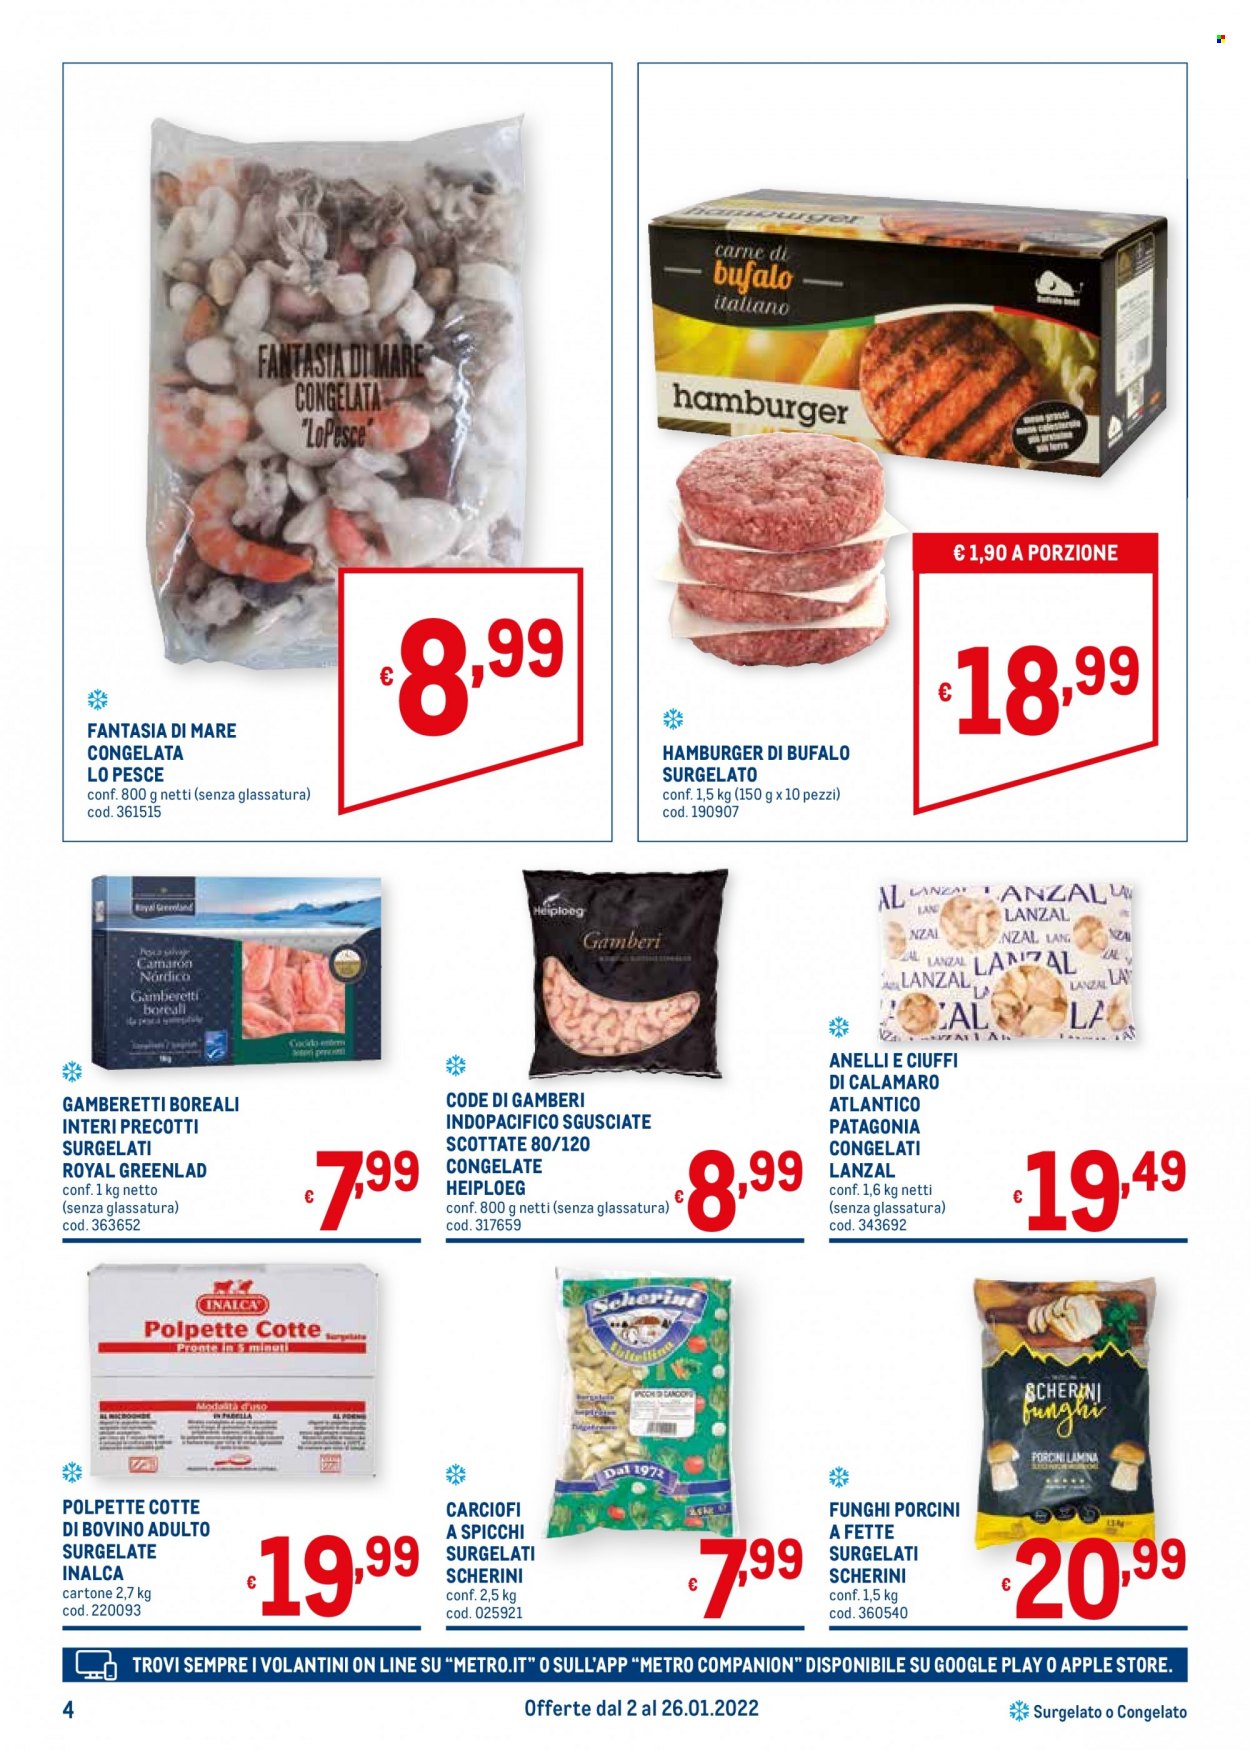 thumbnail - Volantino Metro - 2/1/2022 - 26/1/2022 - Prodotti in offerta - funghi porcini, carciofi, manzo, hamburger, polpette, calamari, pesce, gamberi, gamberetti, calamaro patagonico. Pagina 4.